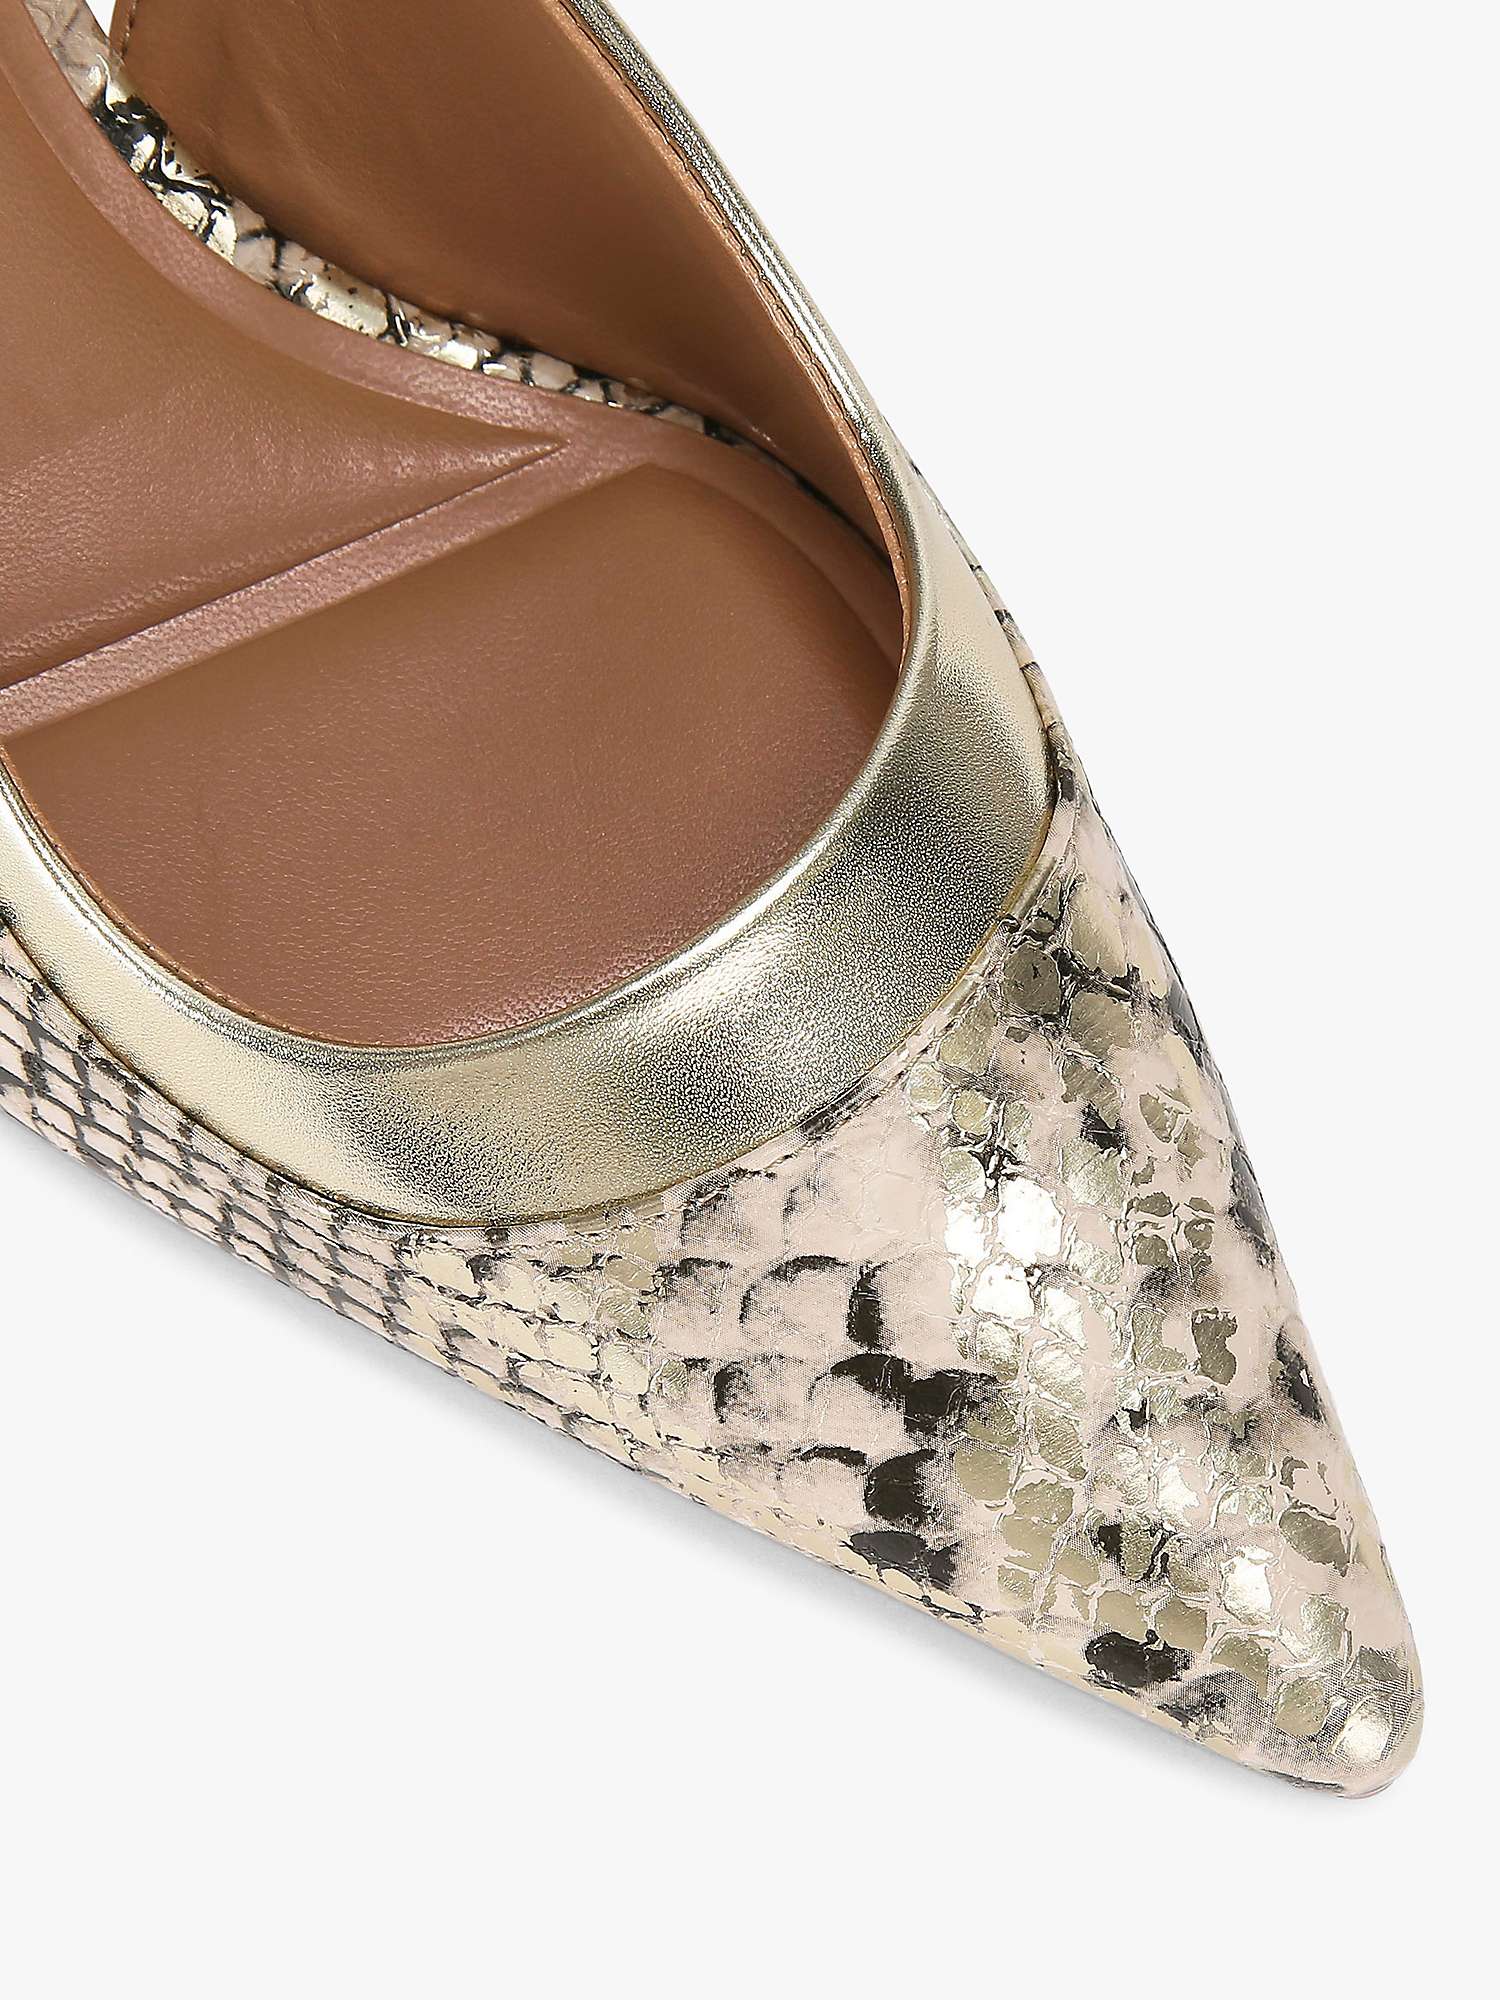 Buy Carvela Countess Slingback Leather Court Shoes, Natural Beige Online at johnlewis.com